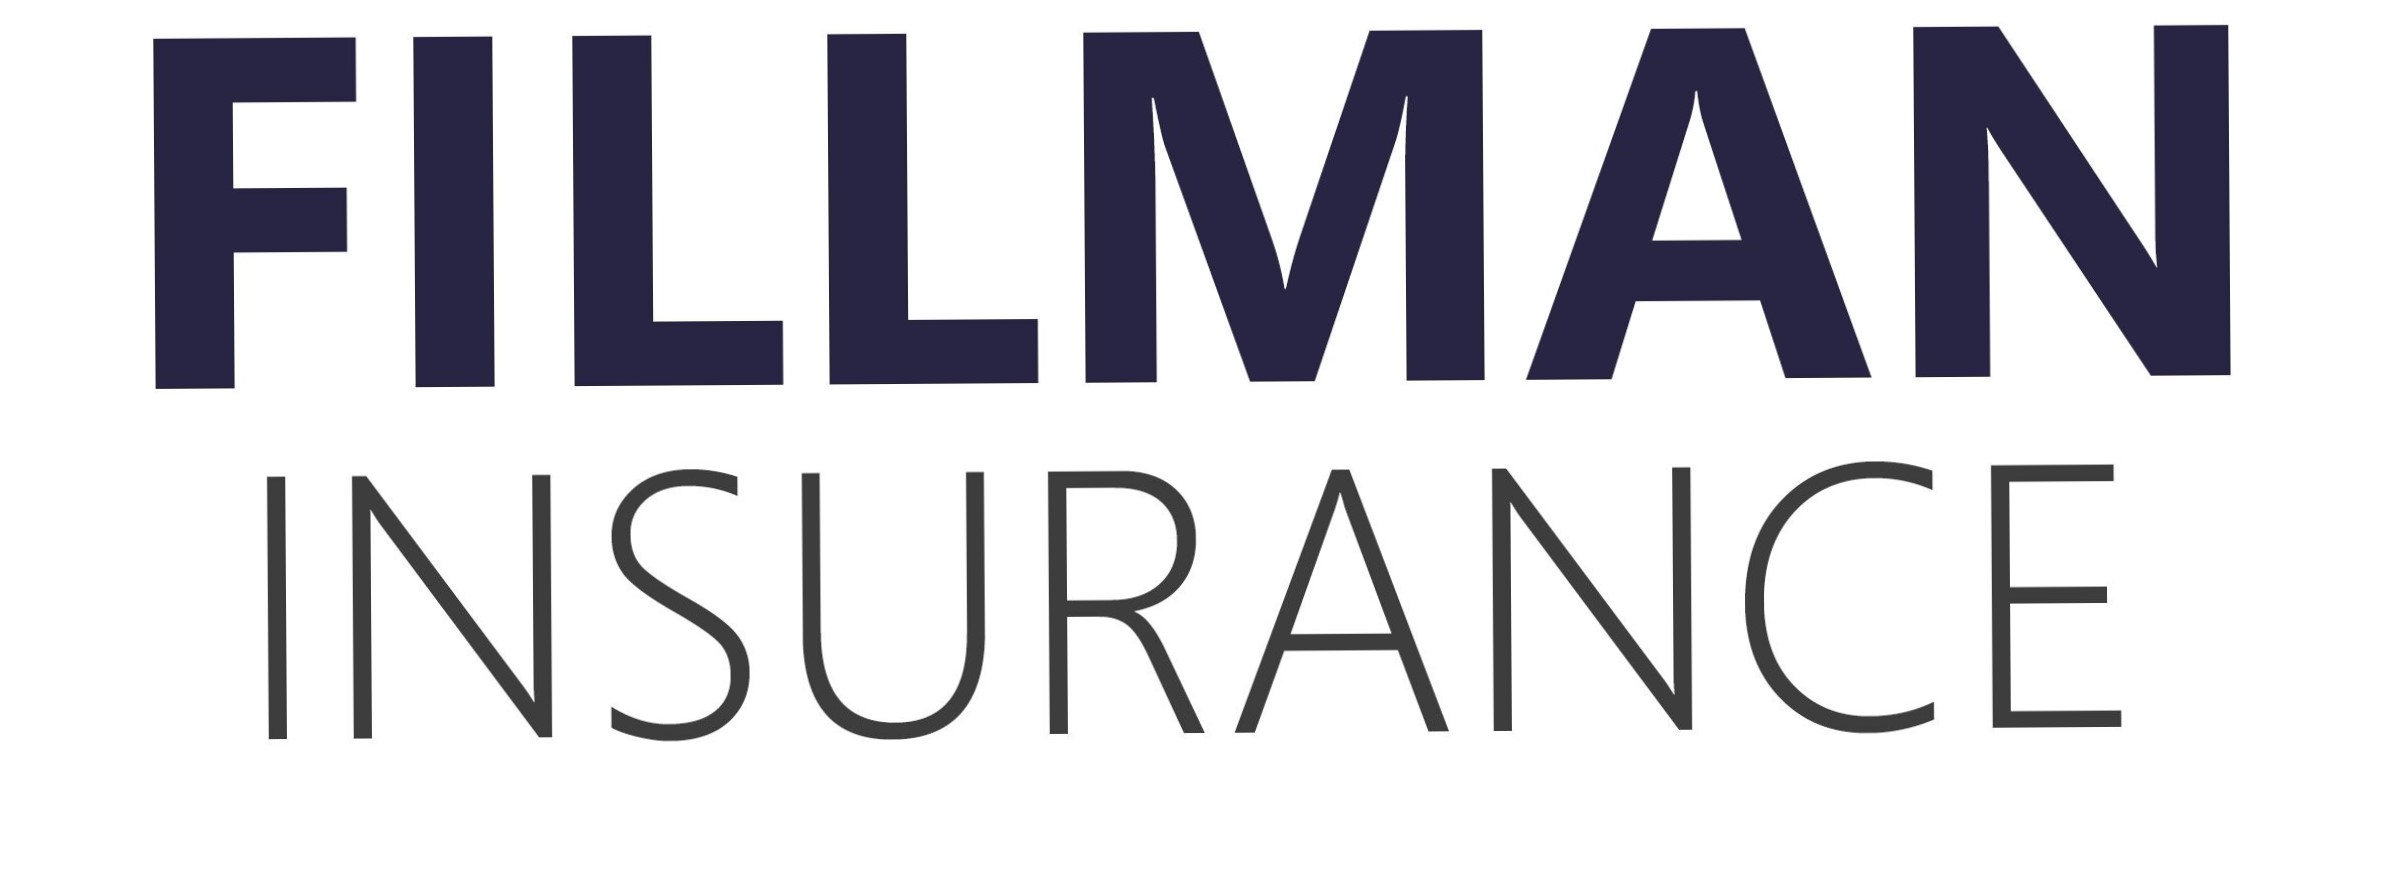 Fillman Insurance's Logo